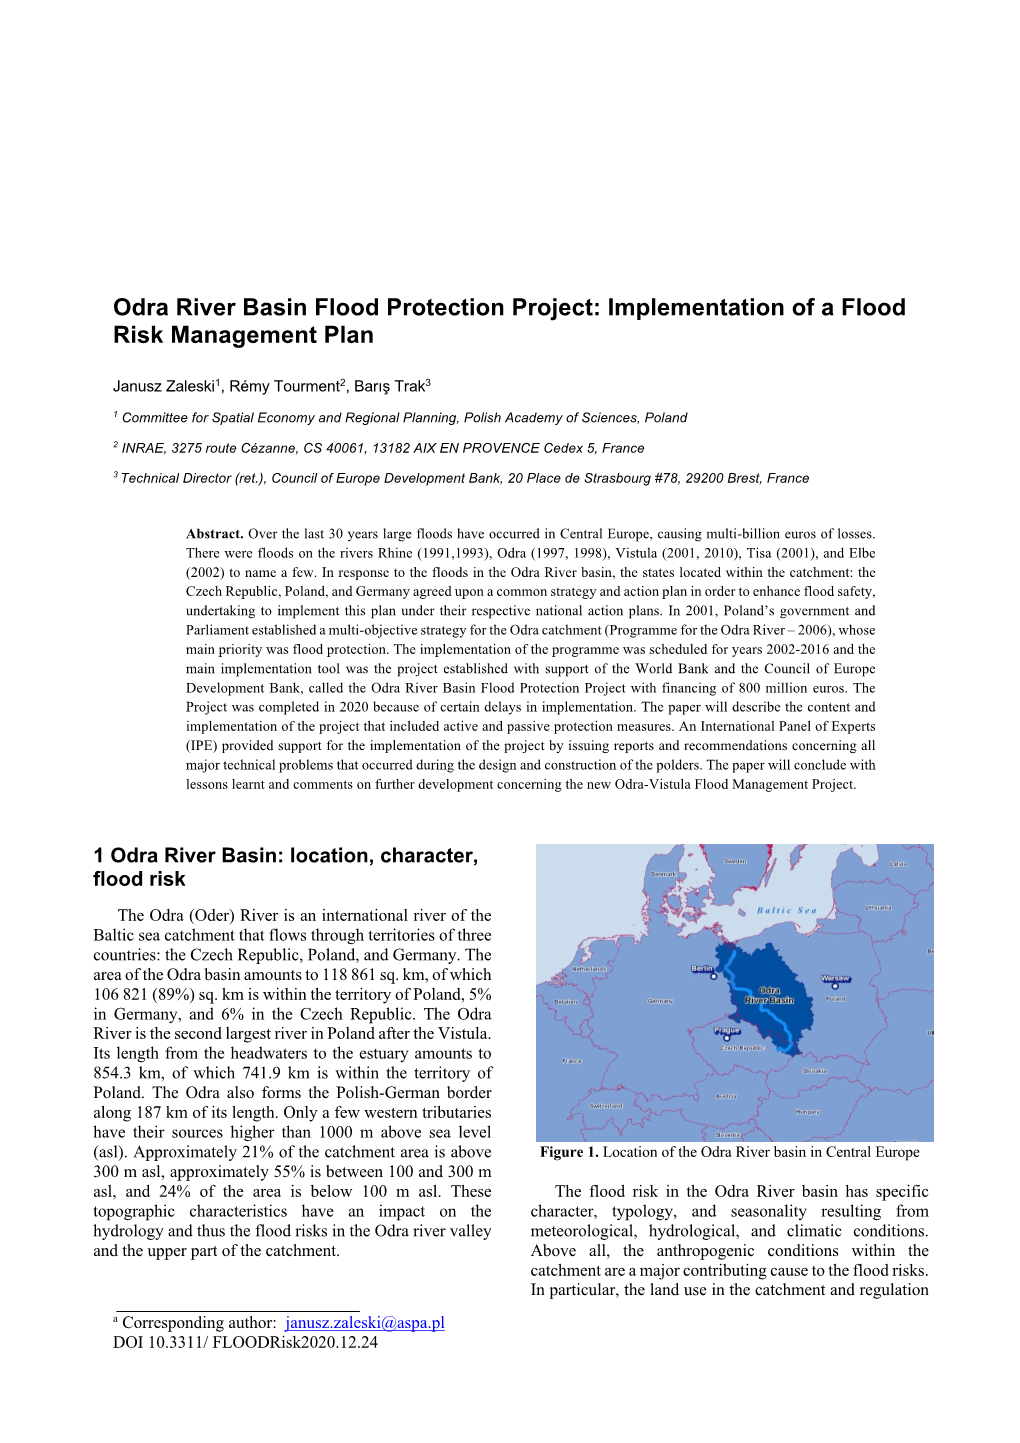 Odra River Basin Flood Protection Project: Implementation of a Flood Risk Management Plan